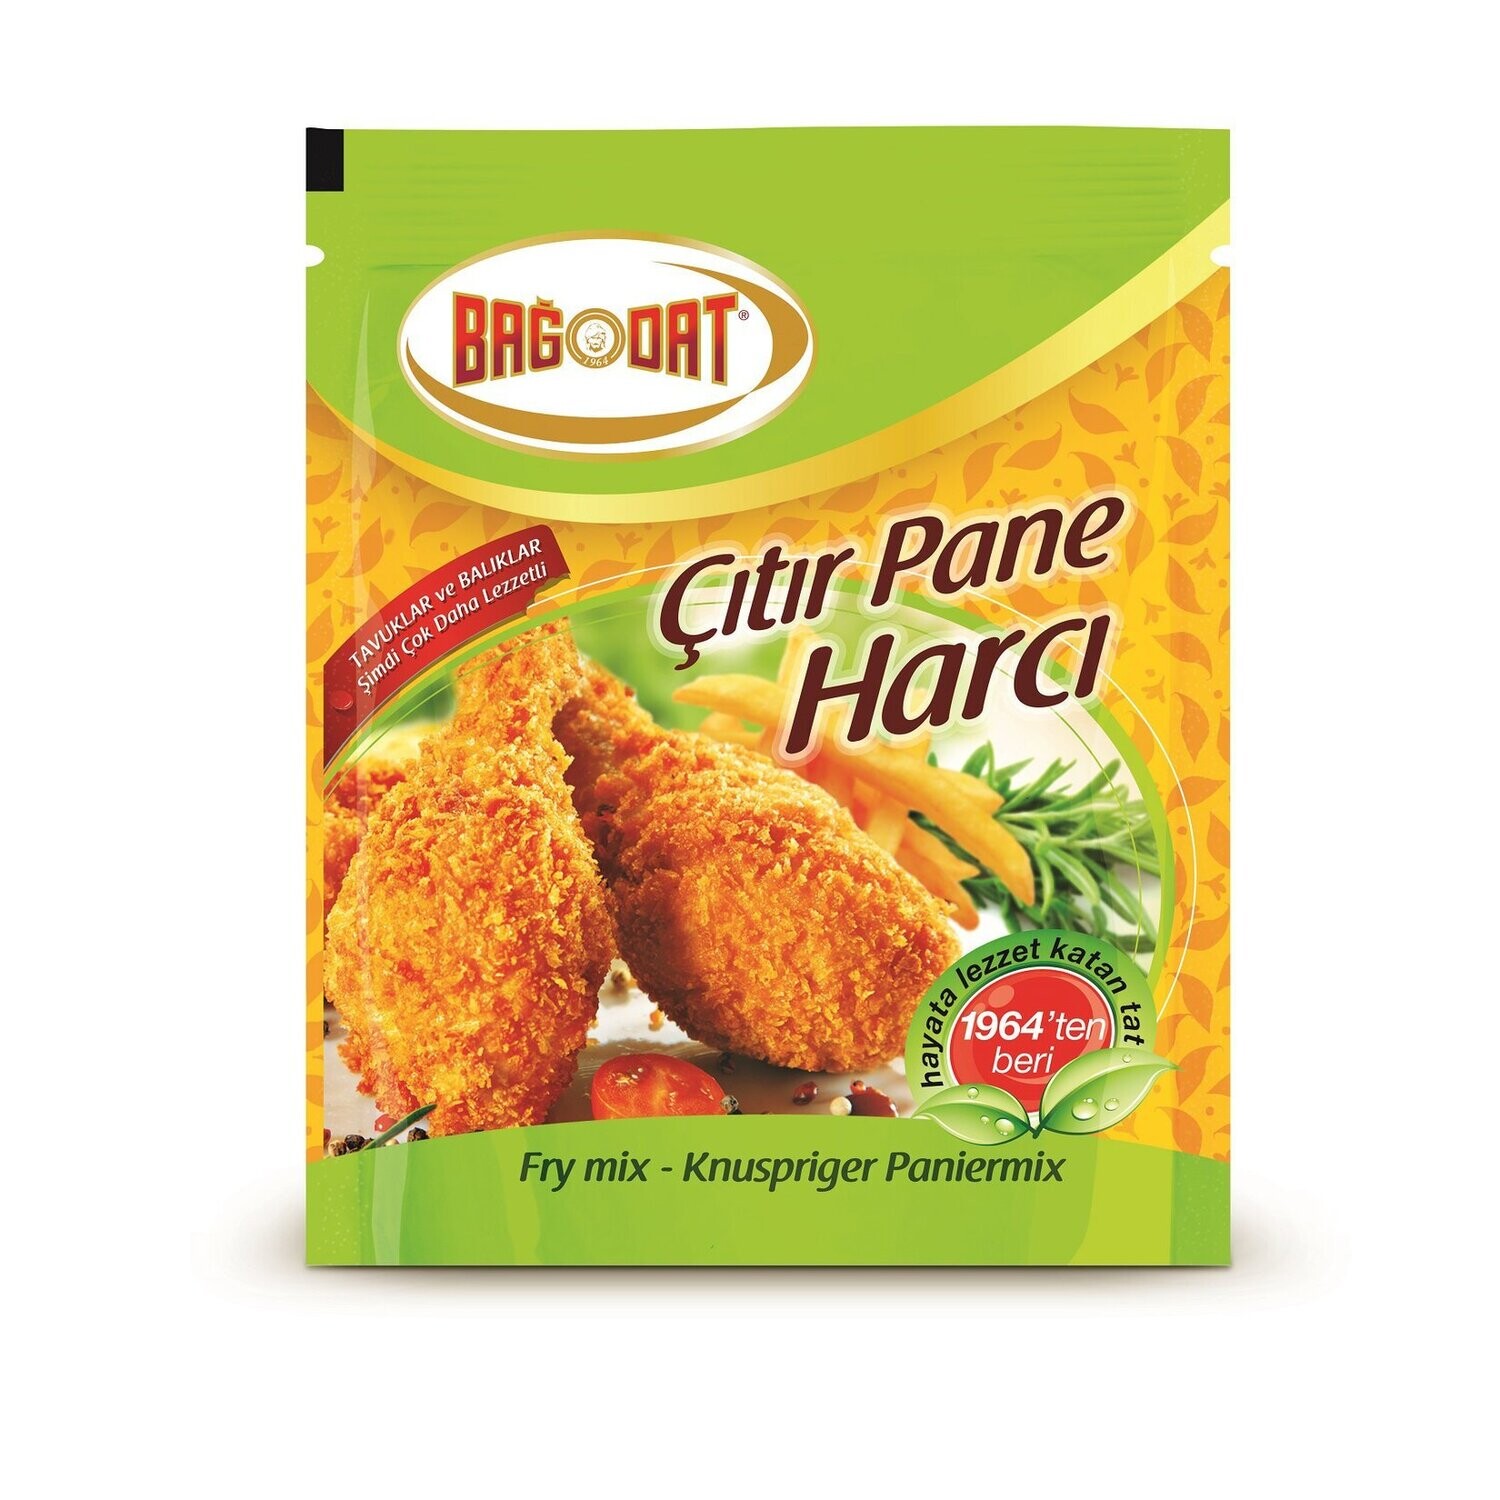 Bagdat Citir Pane Harci 90g - Fry Mix -Halal